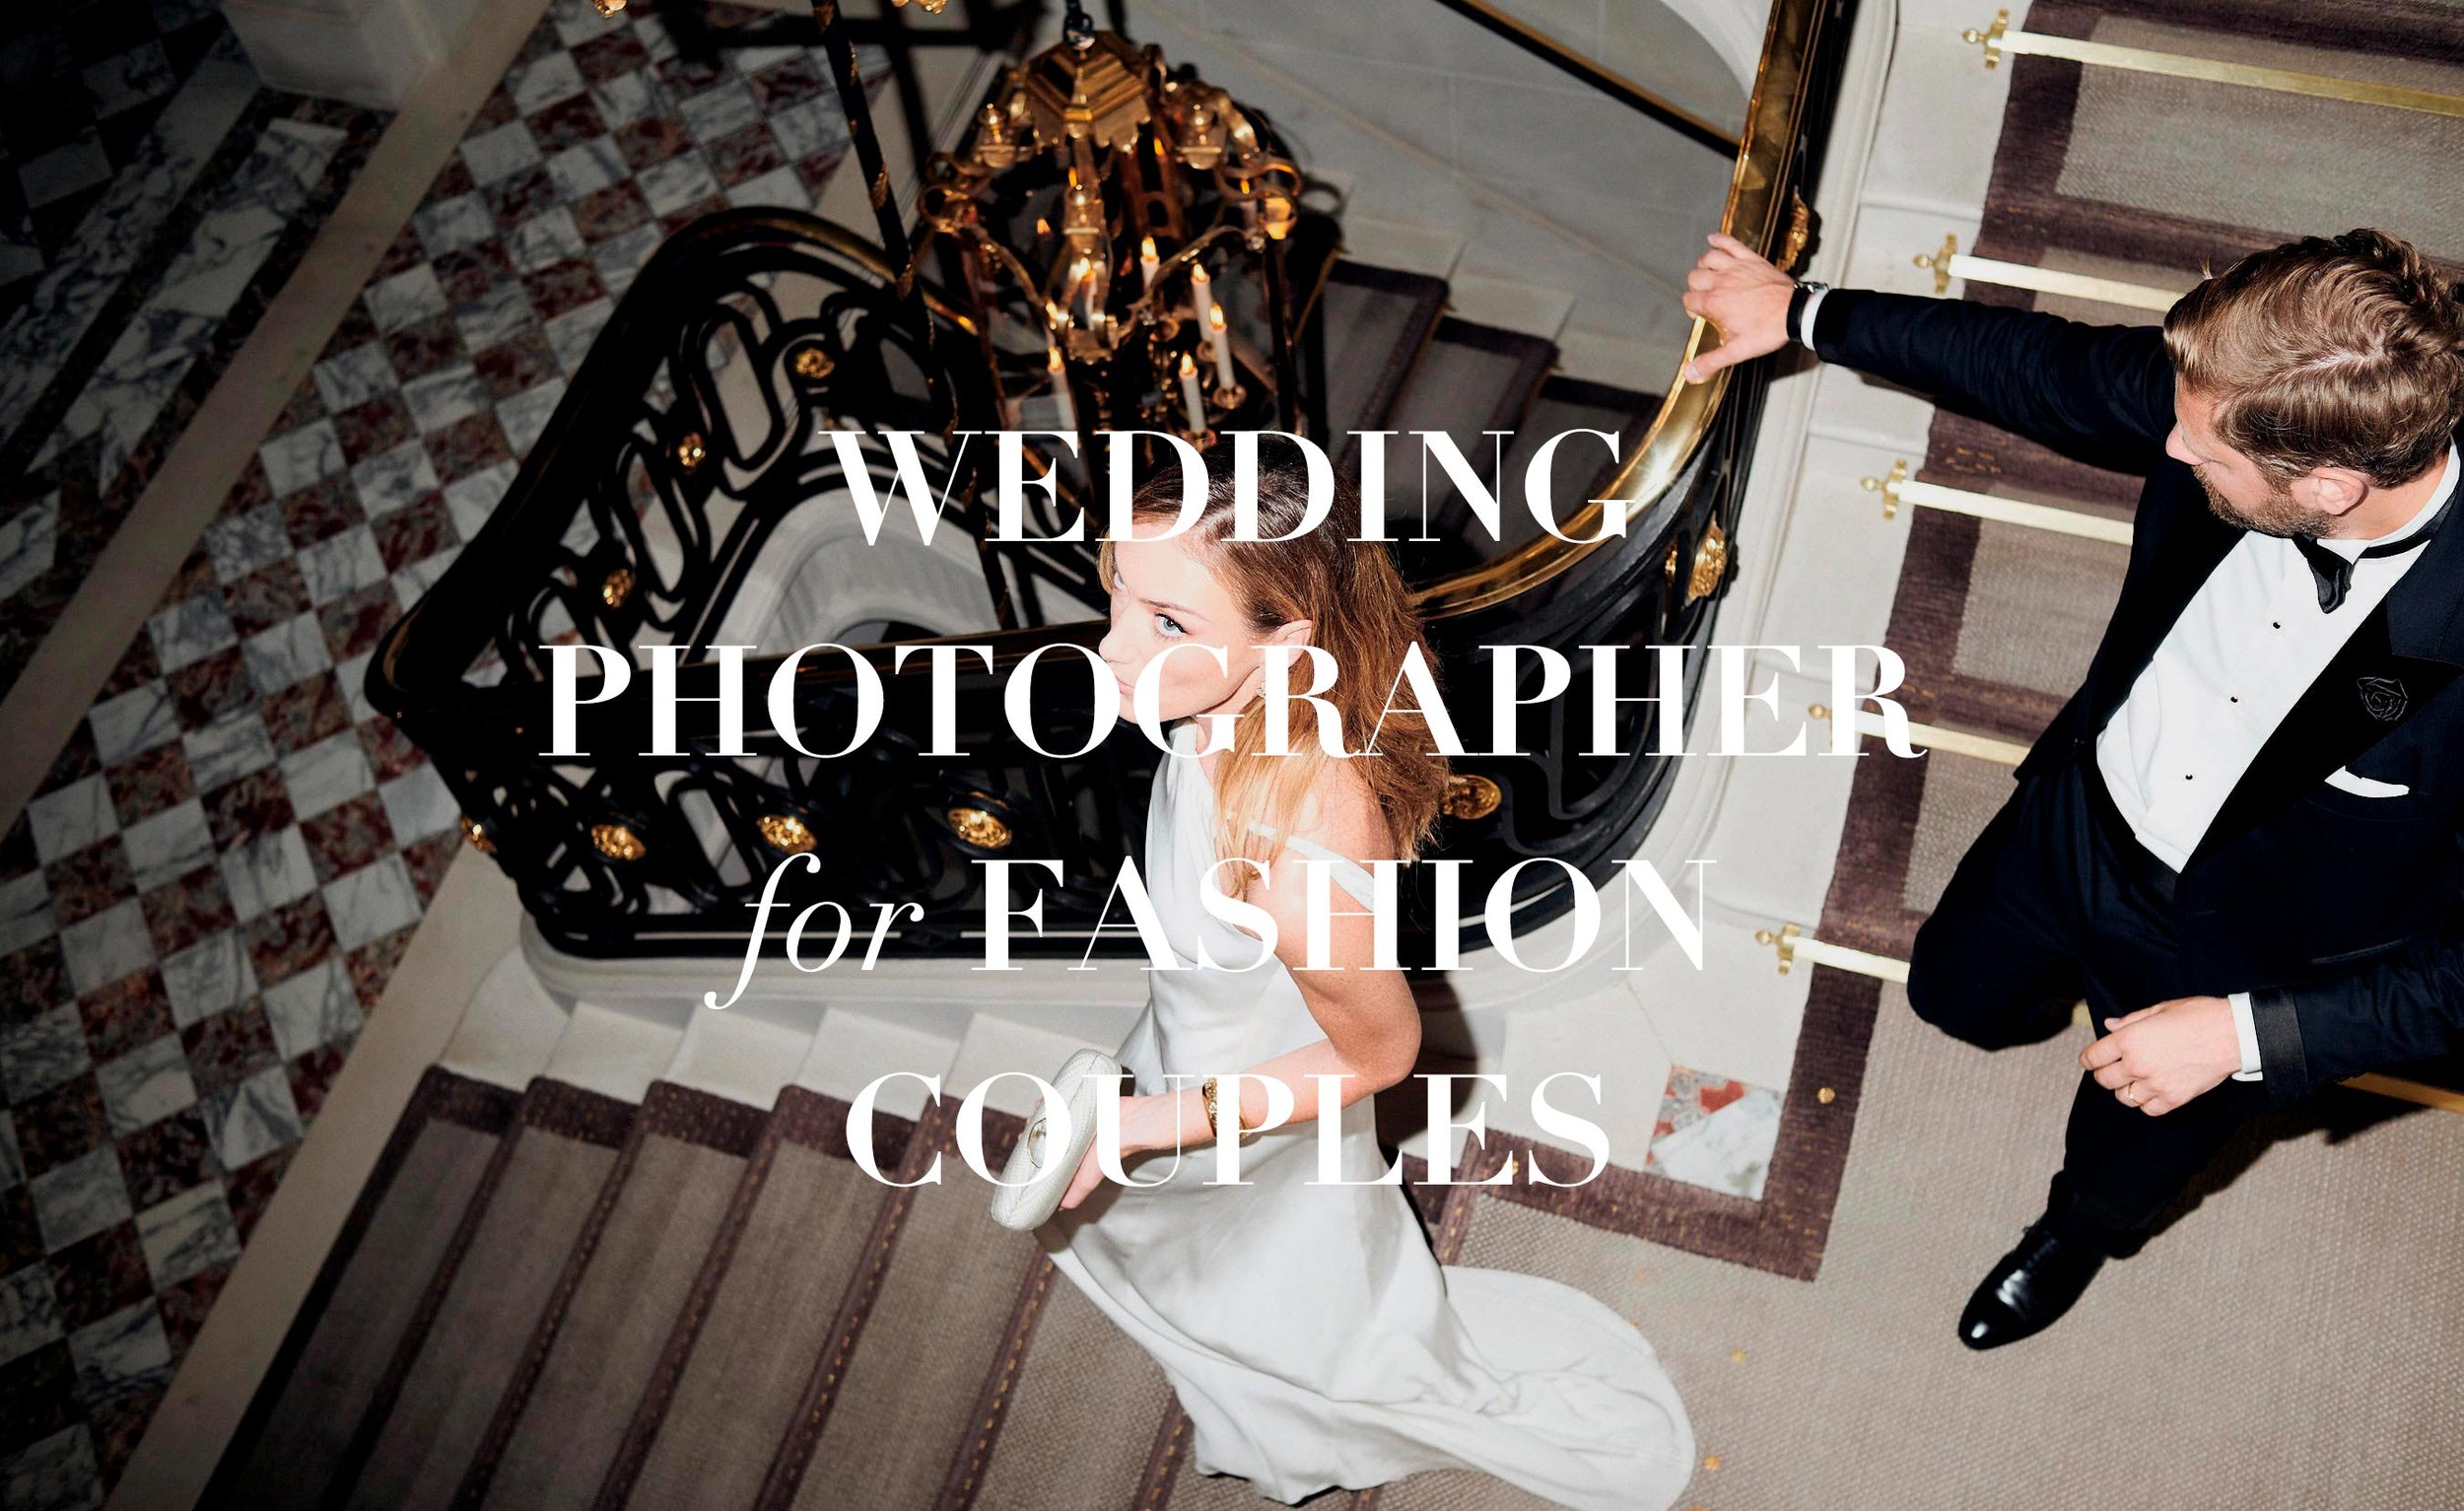 David_picchio_fashion_wedding_photographer_couple_paris_france_elopment_homepage_14a.jpg